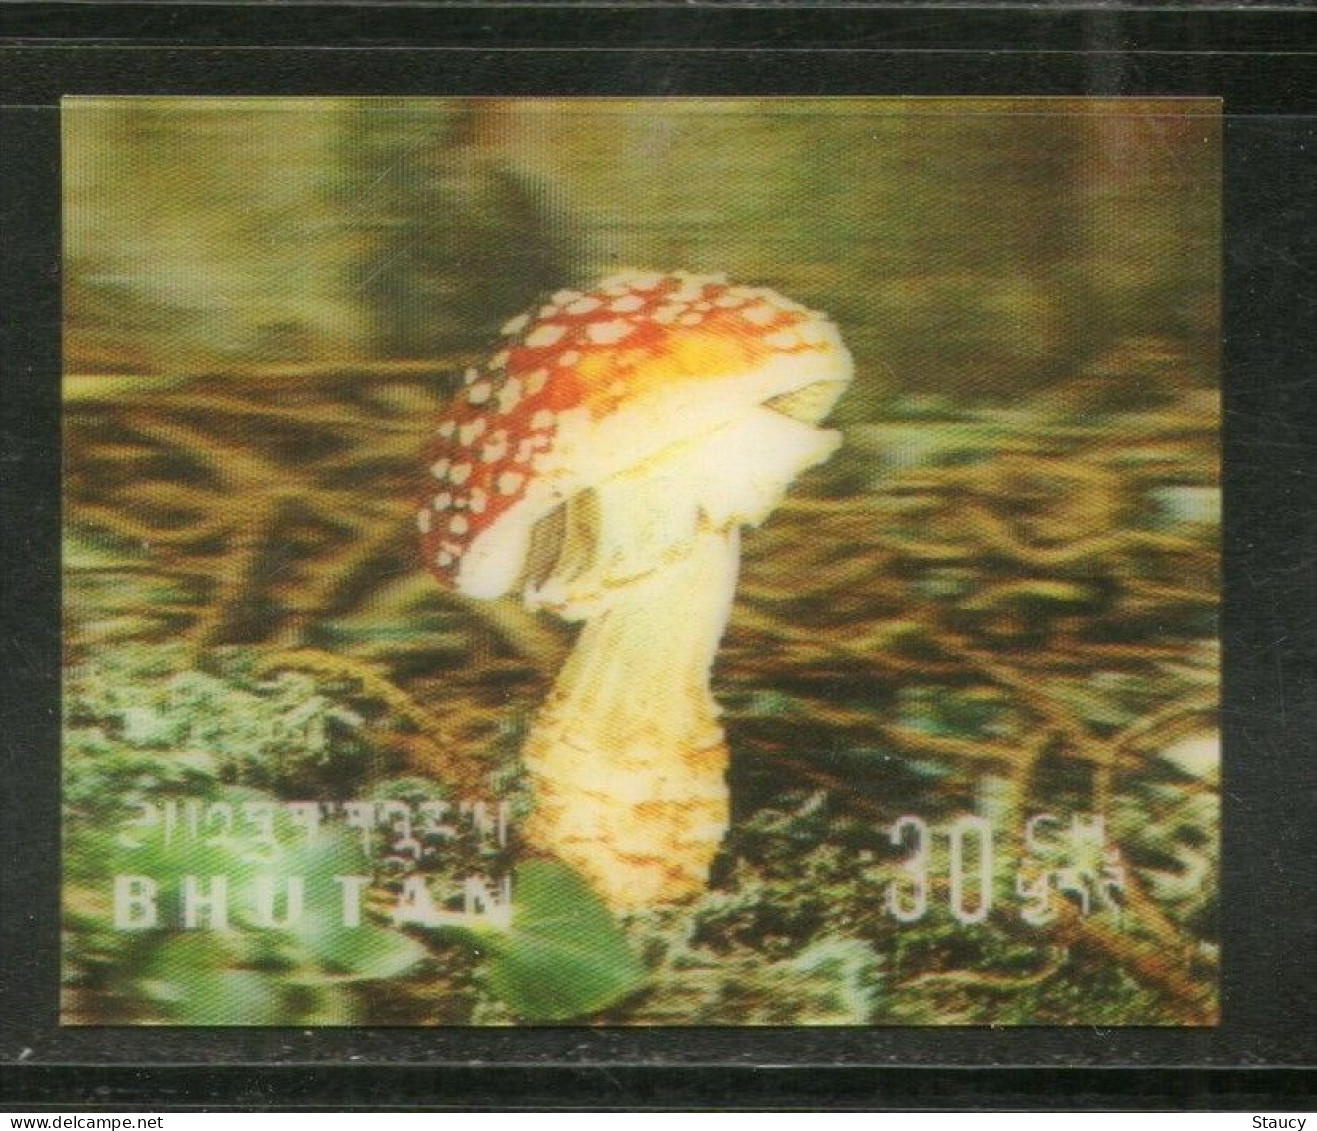 BHUTAN 1973 MUSHROOMS Plastic - 3-D Odd / Unusual / Unique Stamp MNH, As Per Scan - Fouten Op Zegels